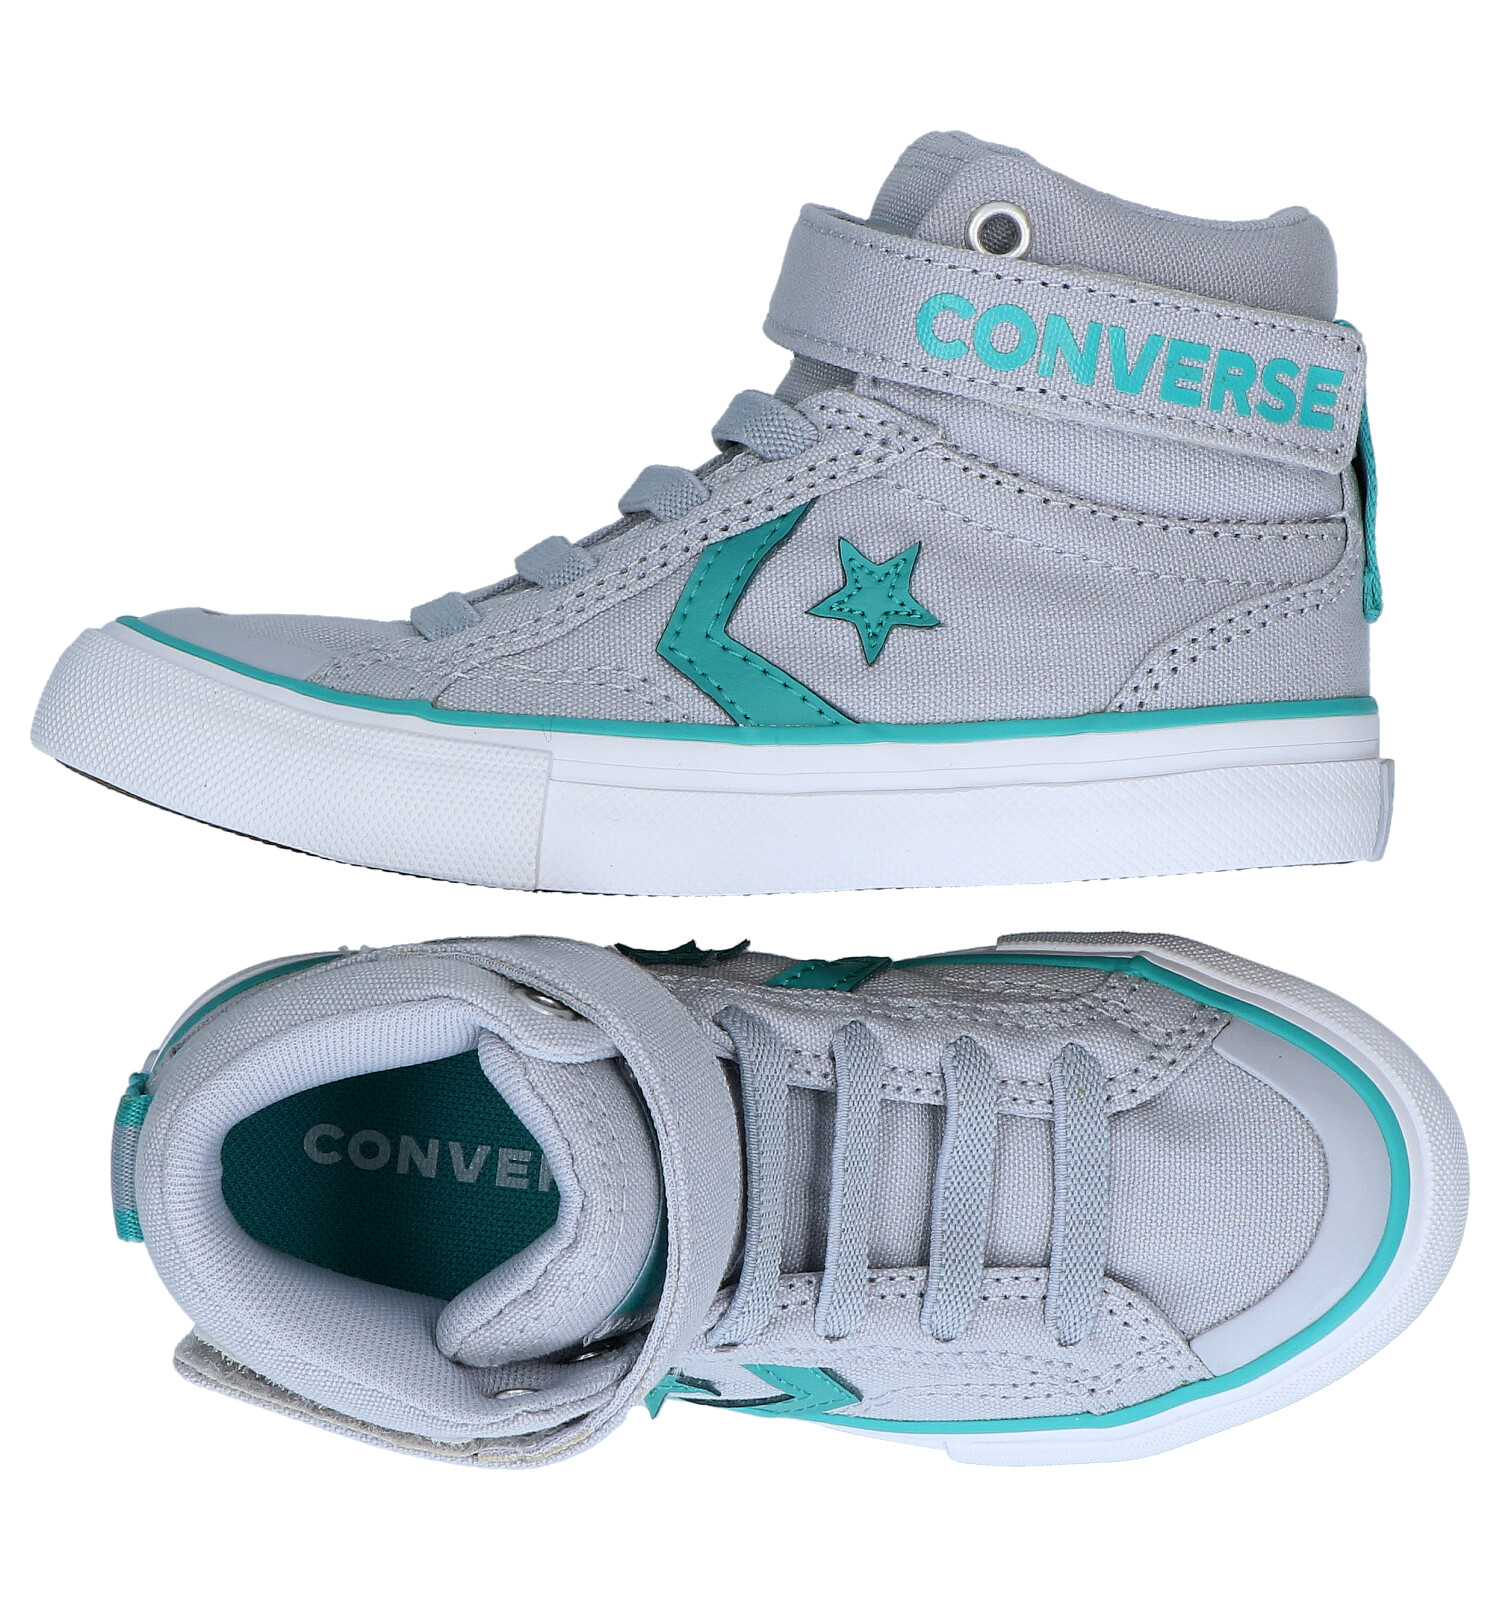 royalty Dempsey merknaam Converse Pro Blaze Grijze Sneakers | Jongens Sneakers